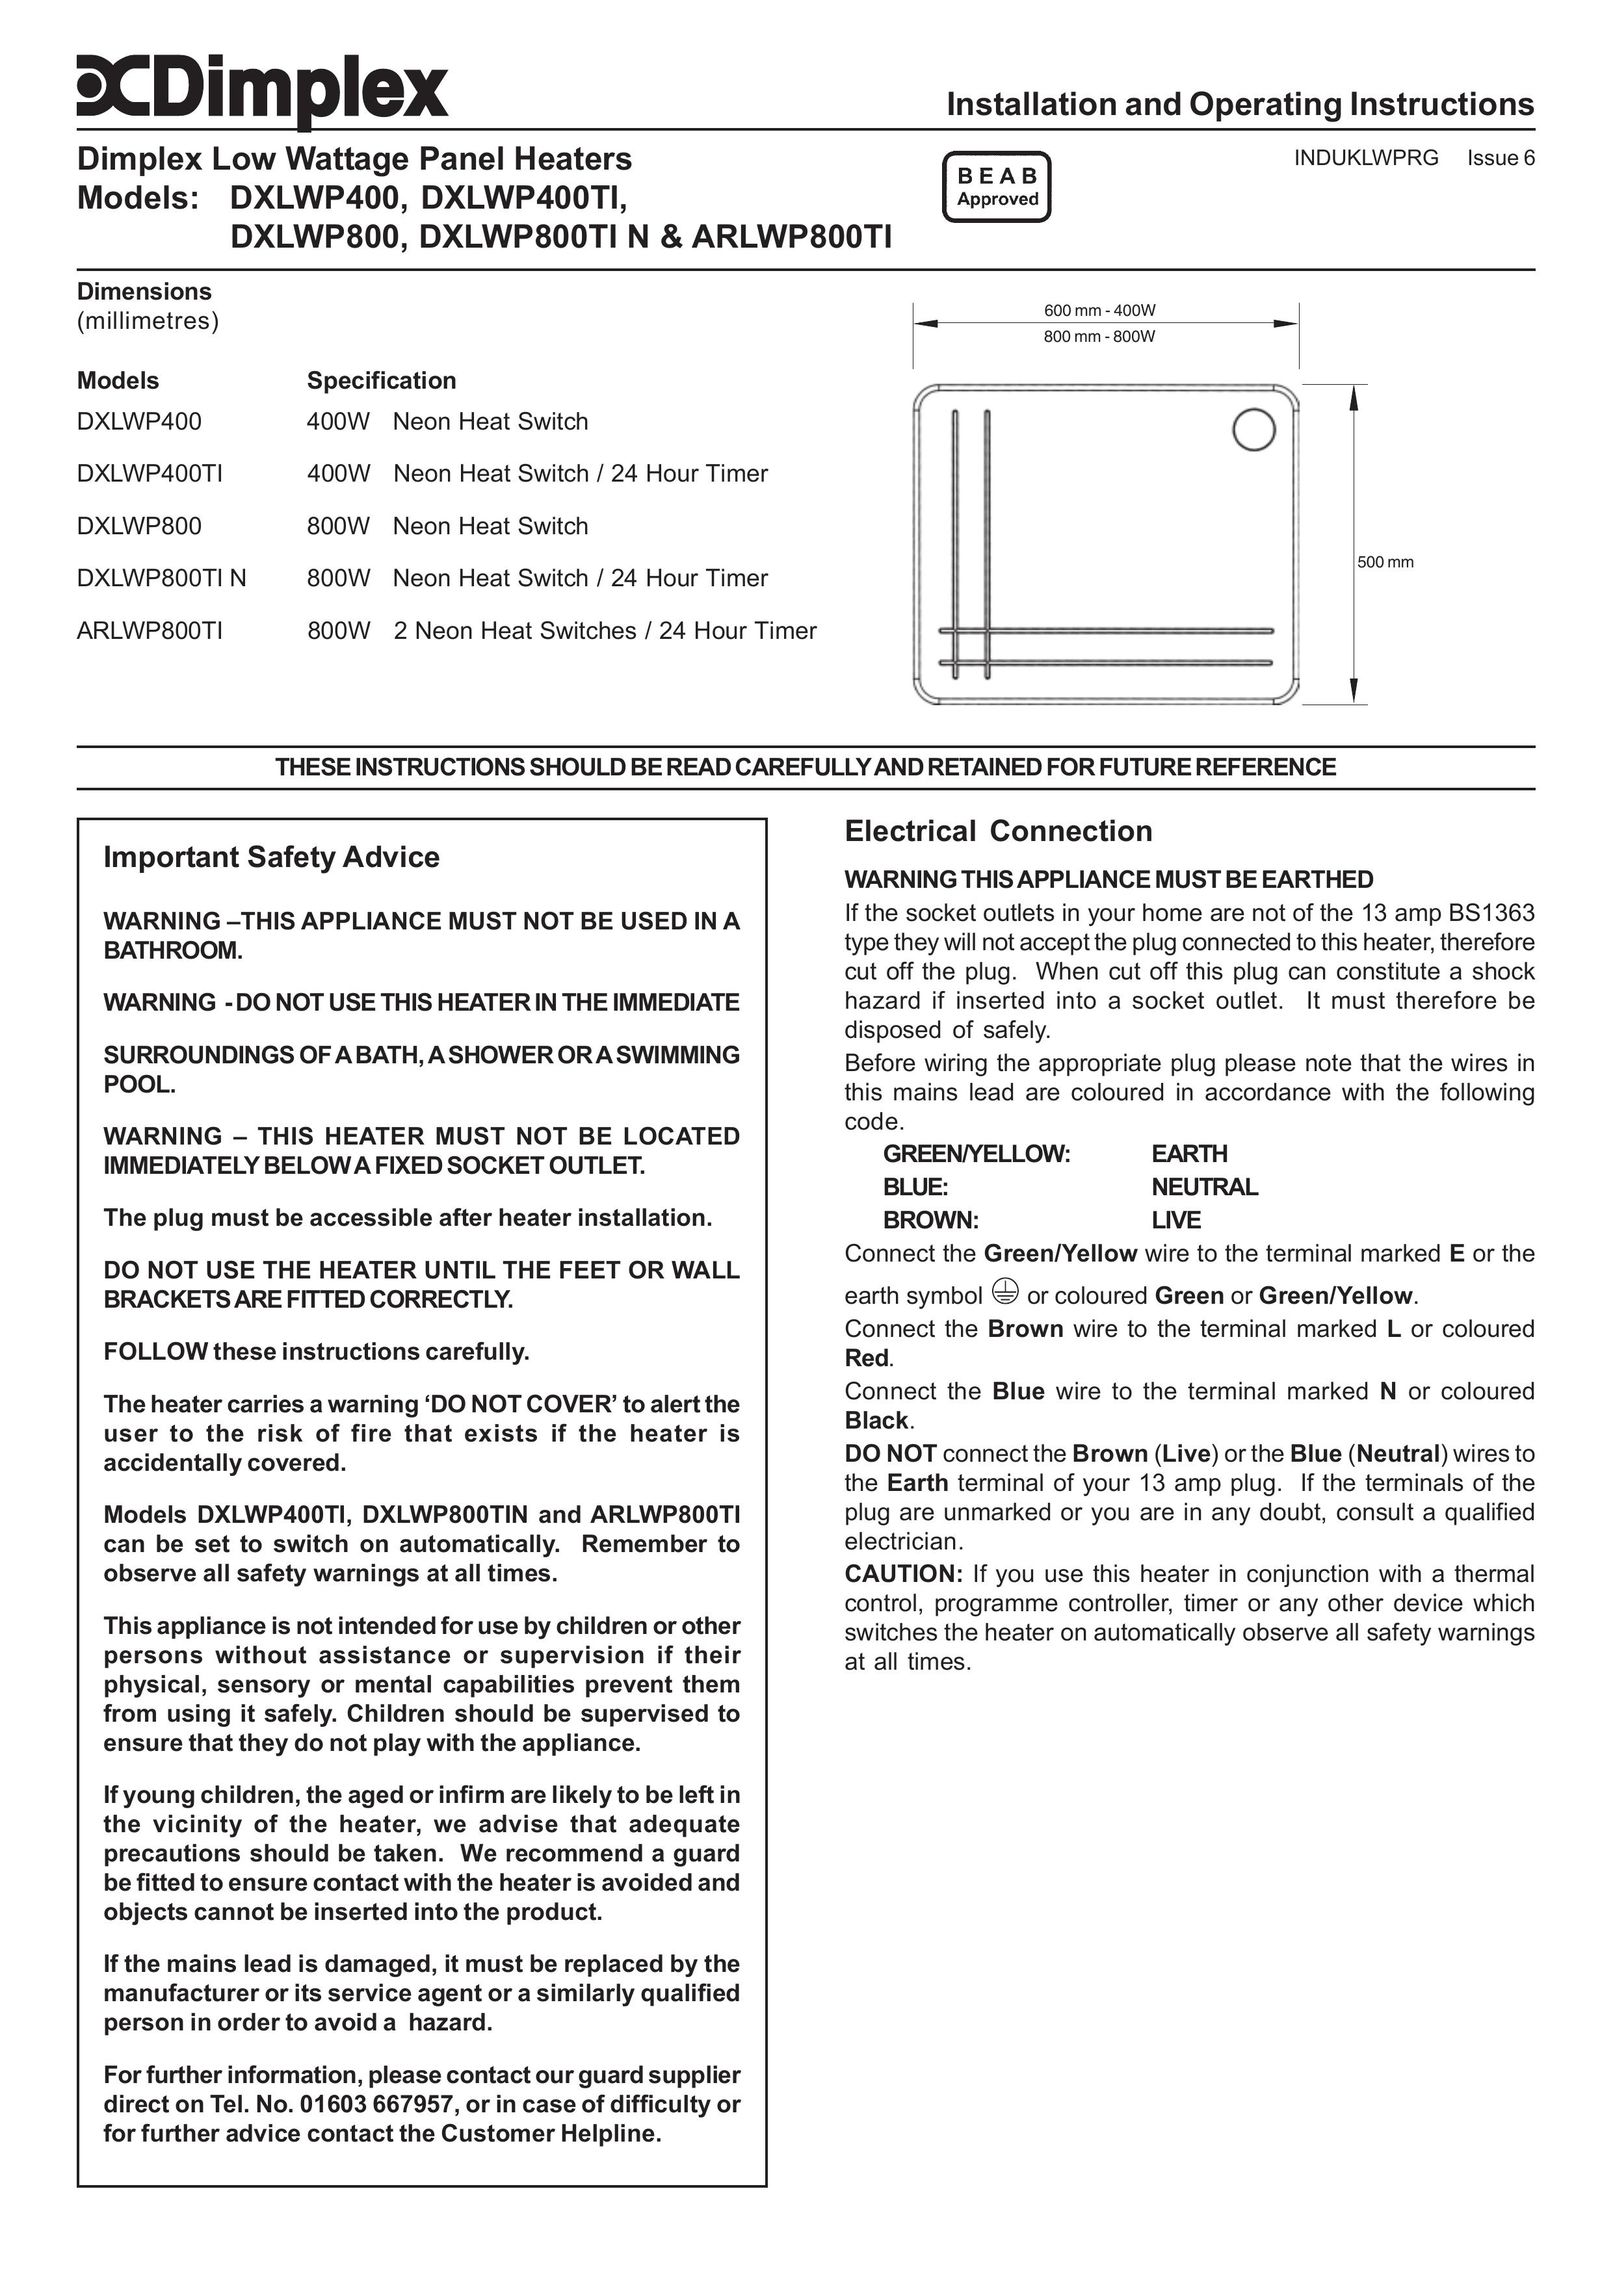 Dimplex DXLWP400TI Fan User Manual